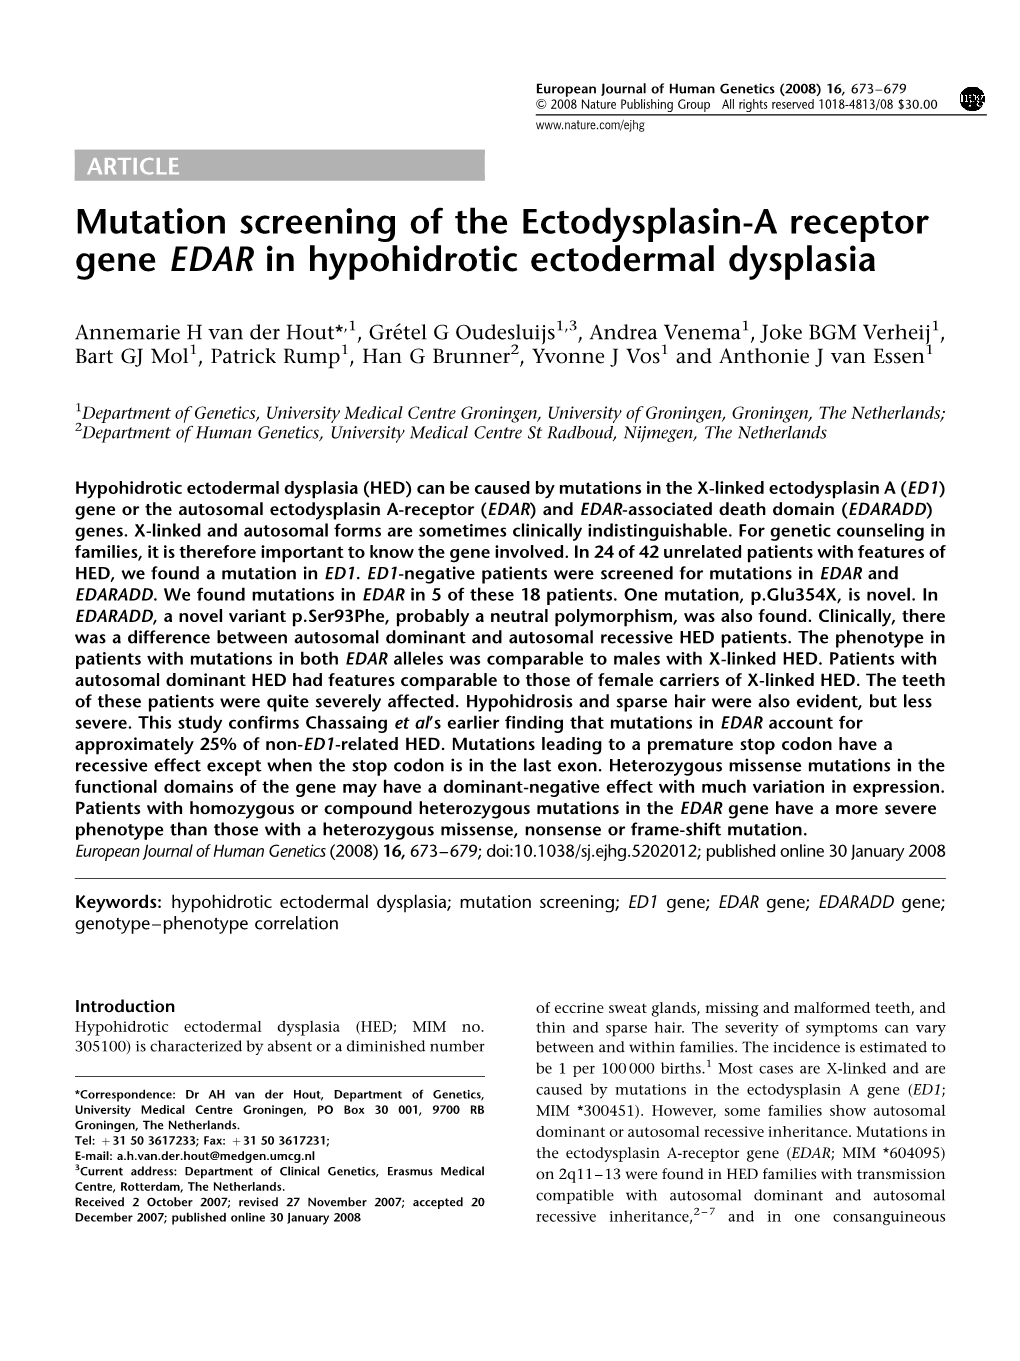 Mutation Screening of the Ectodysplasin-A Receptor Gene EDAR in Hypohidrotic Ectodermal Dysplasia